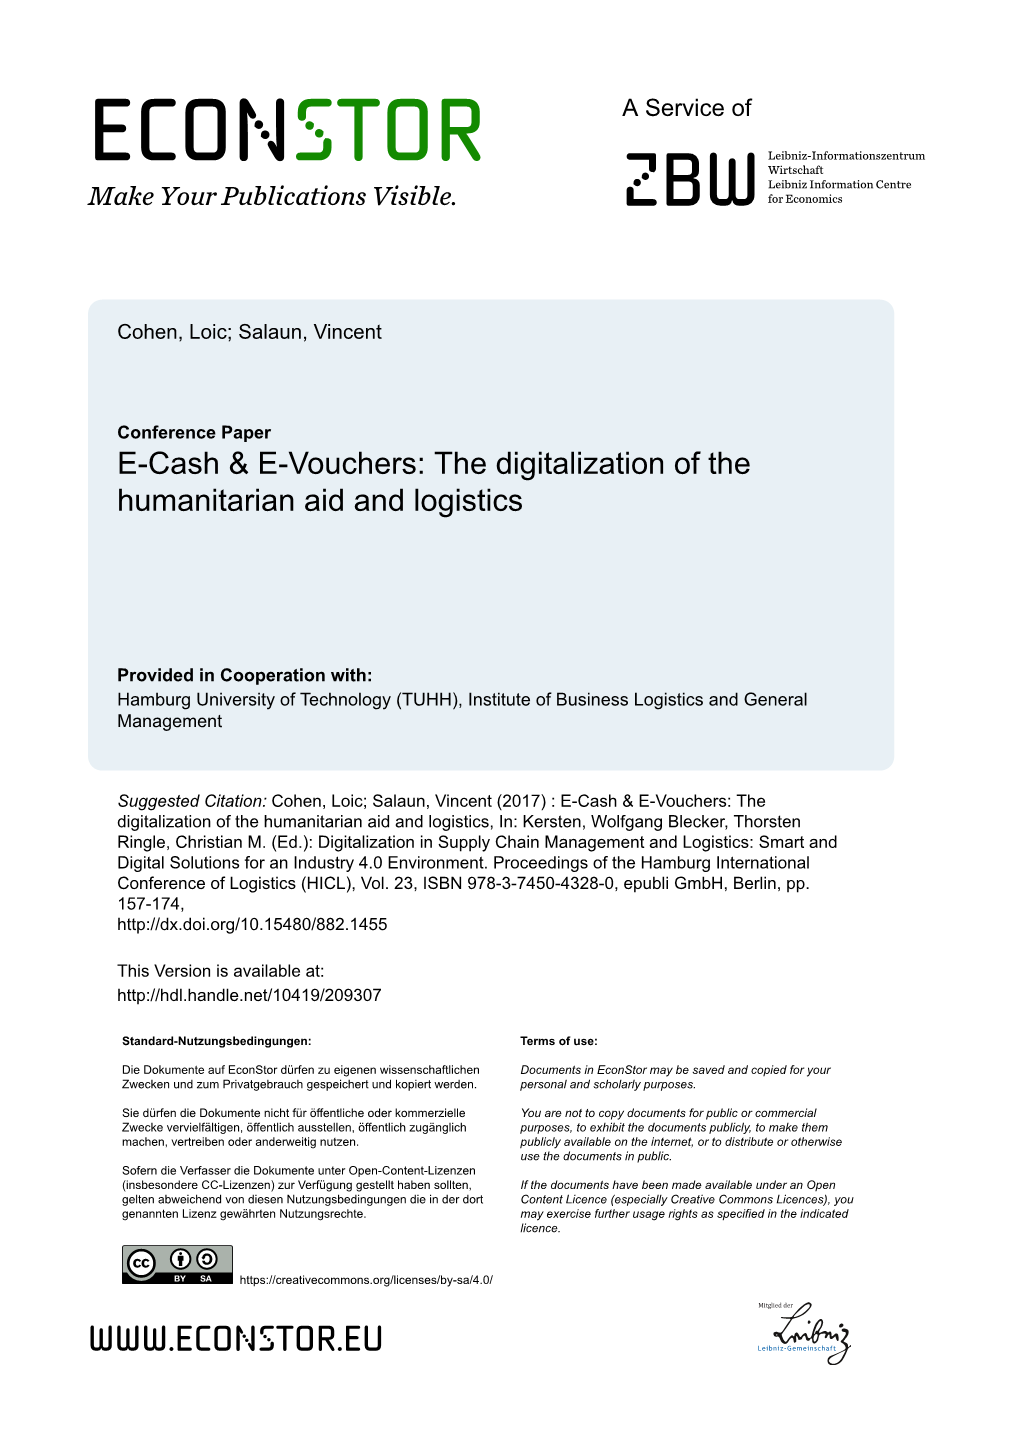 E-Cash & E-Vouchers: the Digitalization of the Humanitarian